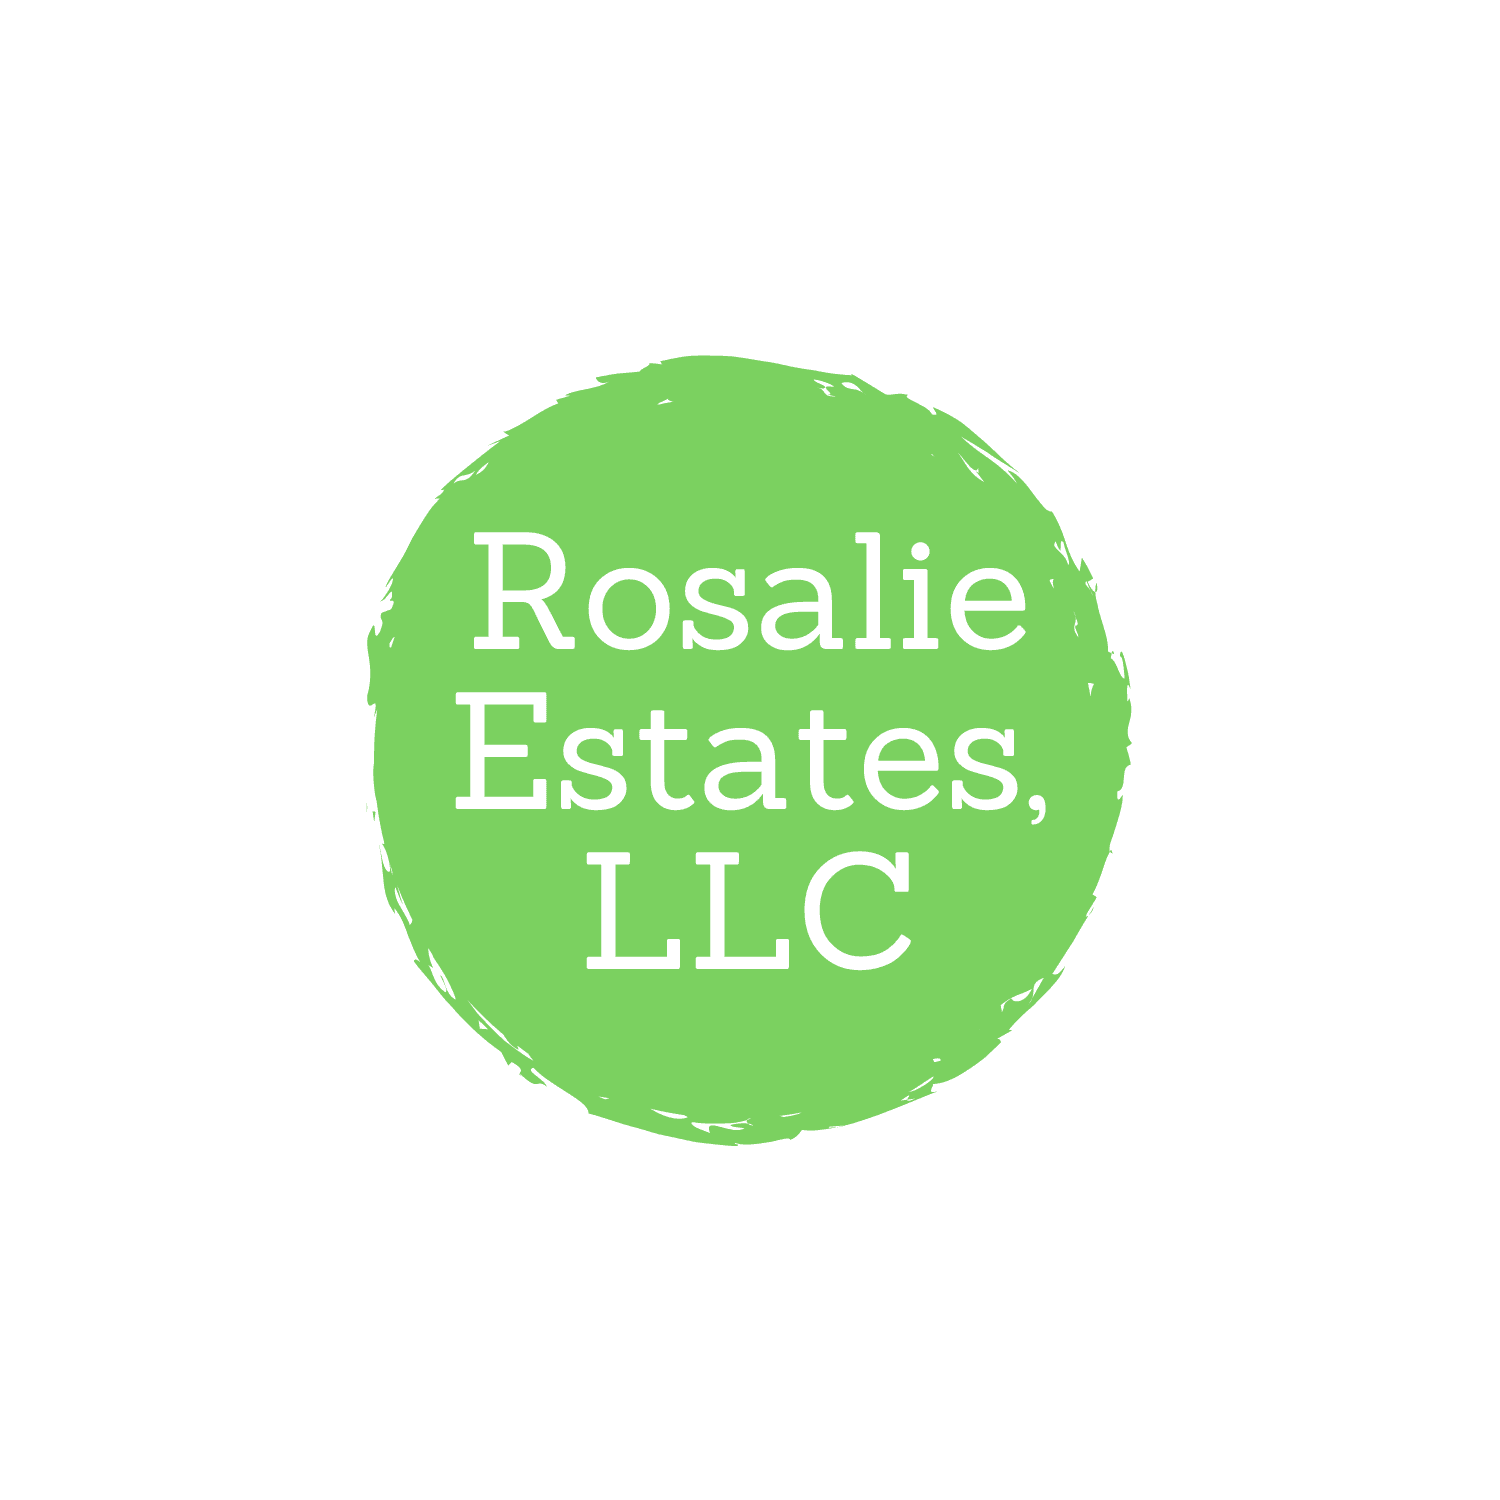 Rosalie Estates, LLC